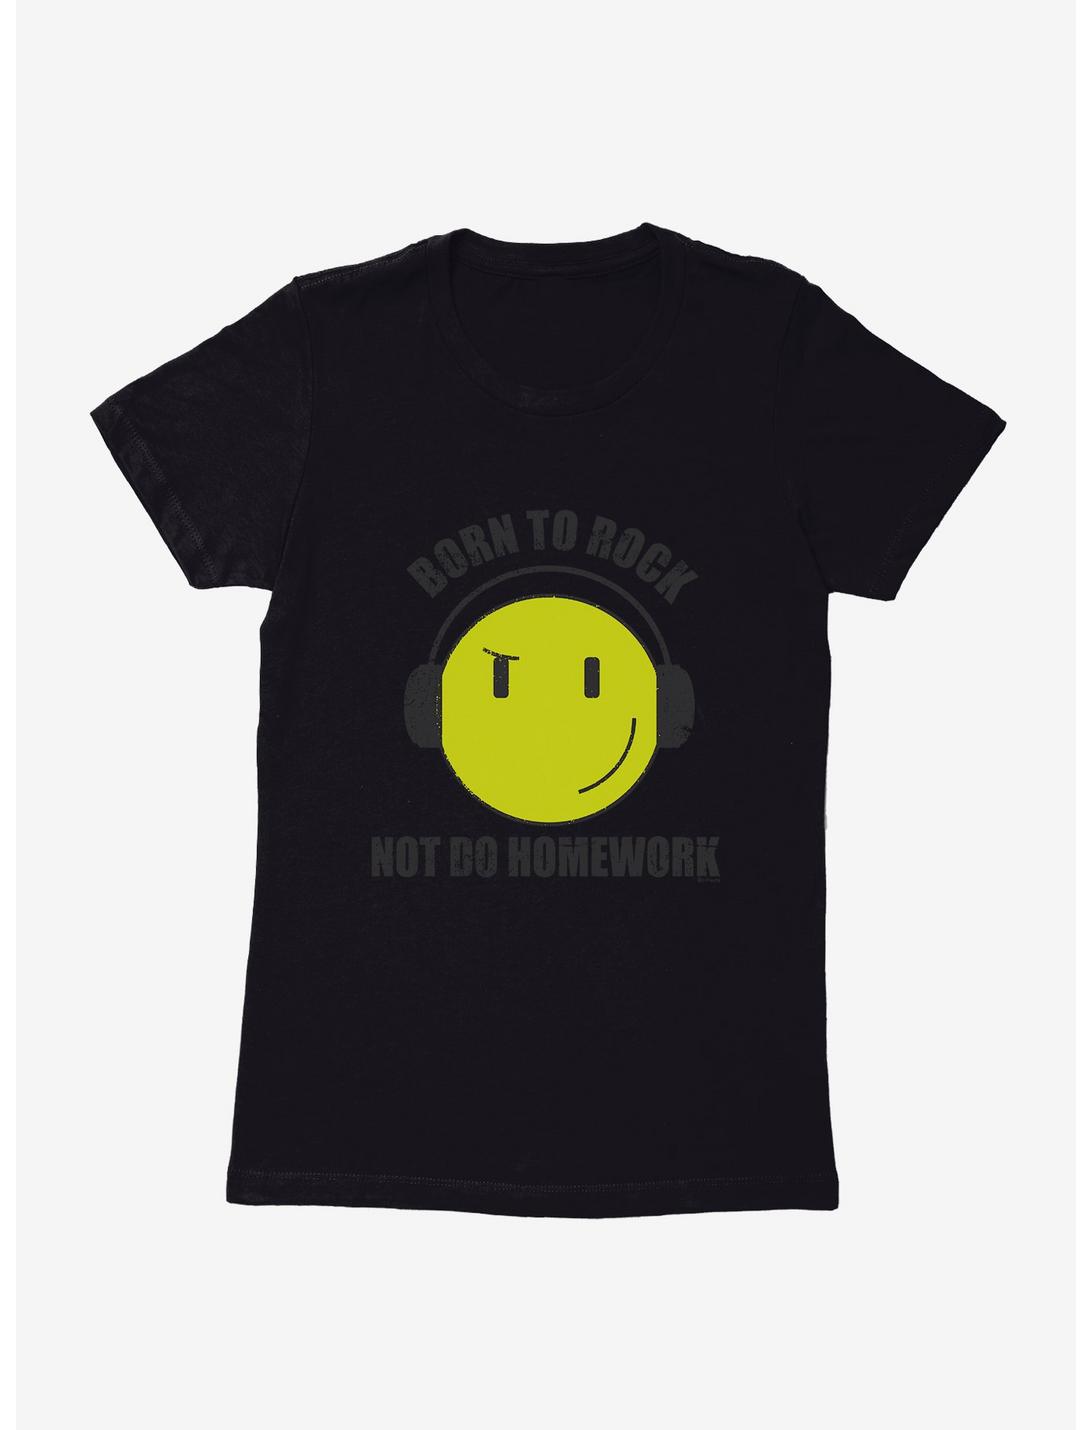 iCreate Born To Rock Not Do Homework Womens T-Shirt, , hi-res